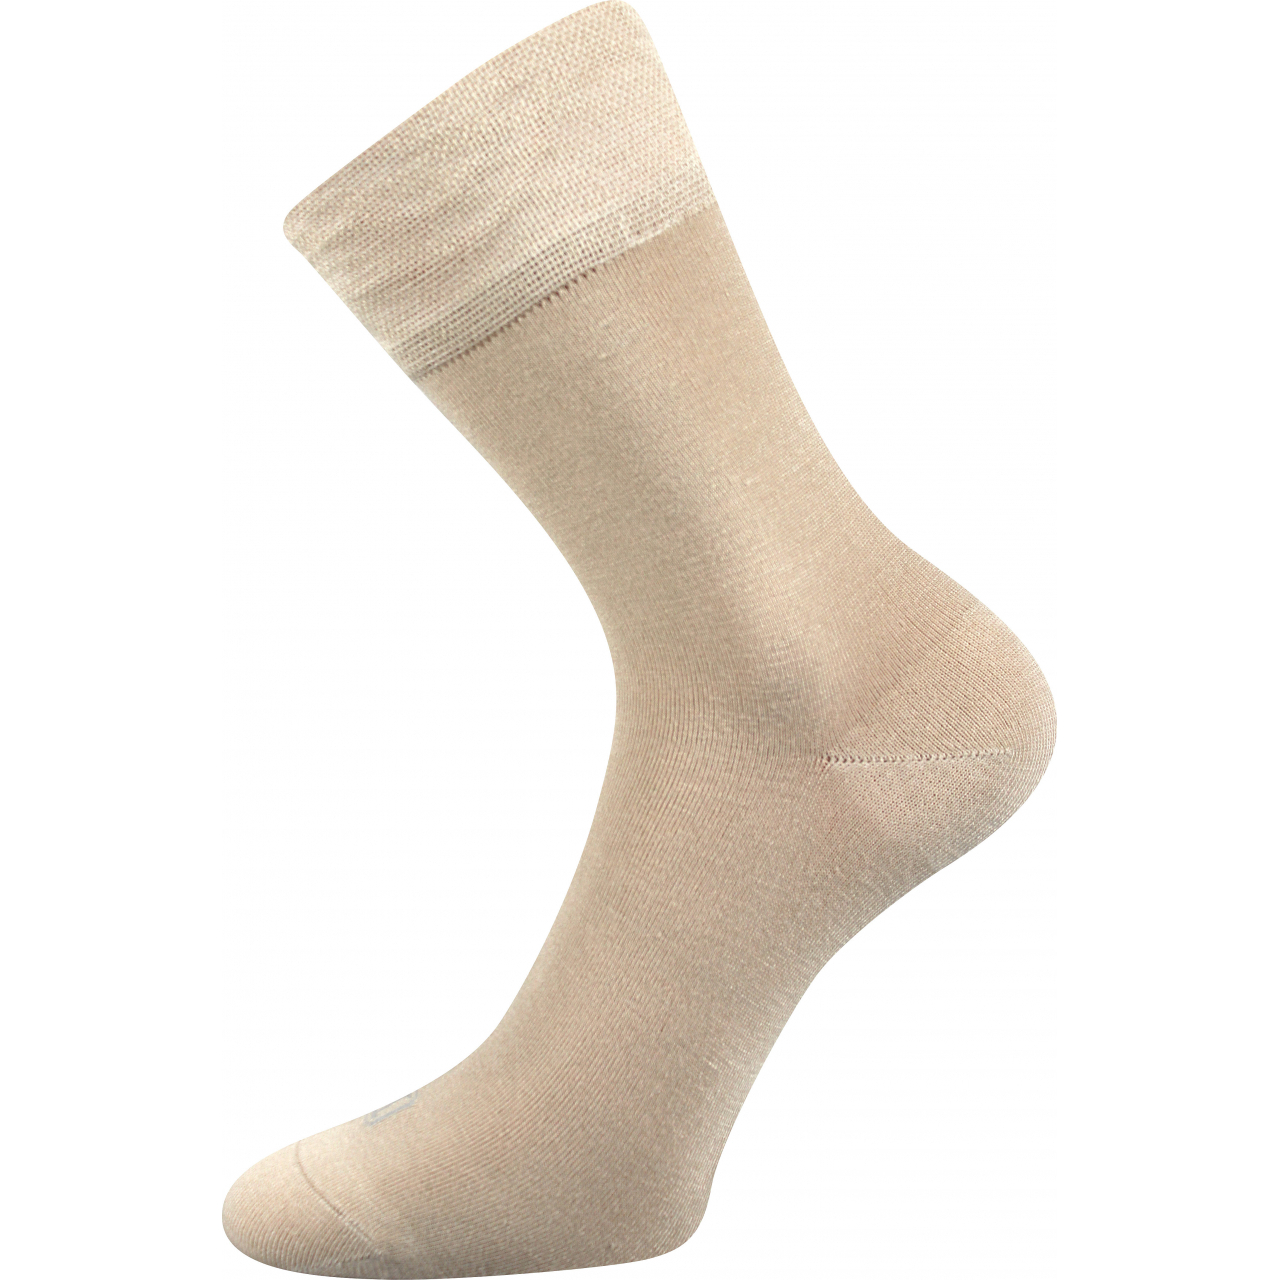 Ponožky unisex bambusové Lonka Deli - béžové, 35-38